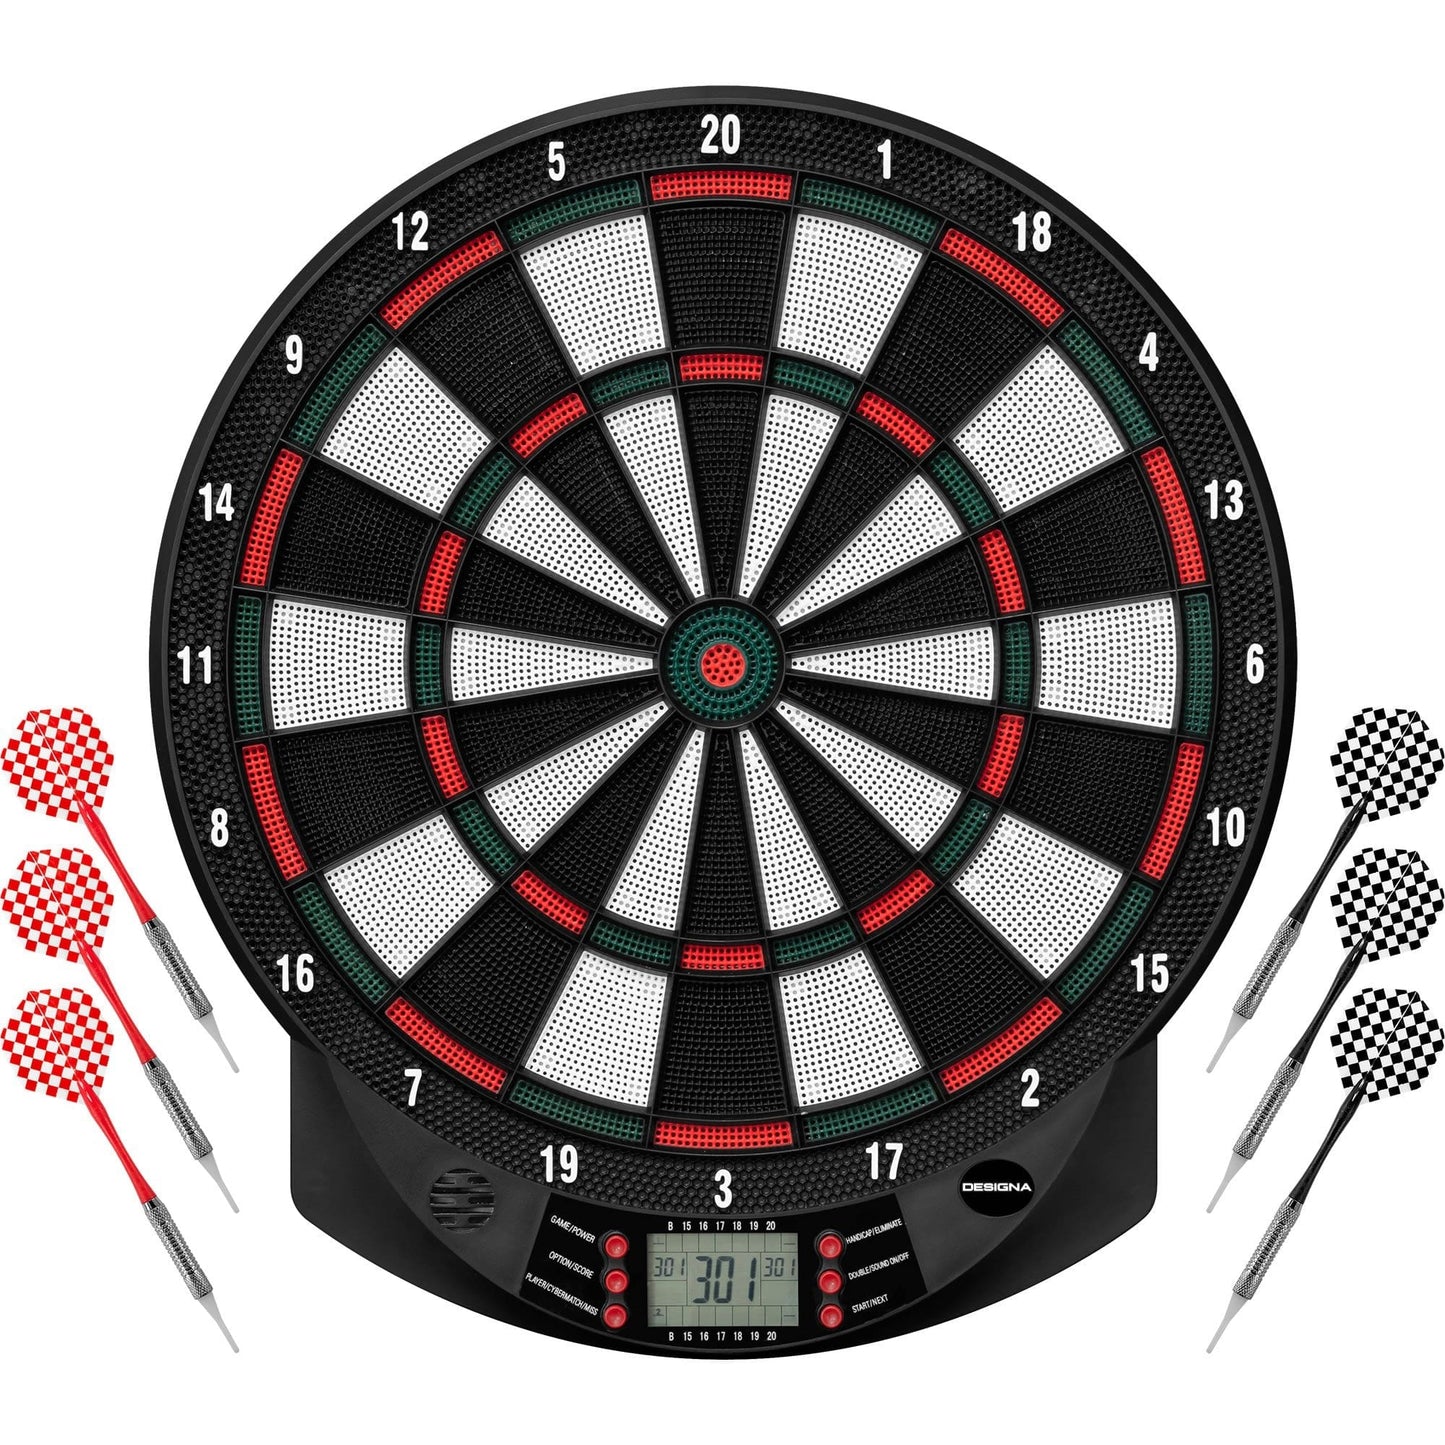 Designa Electronic Soft Tip Dartboard - with 6 darts - upto 8 players